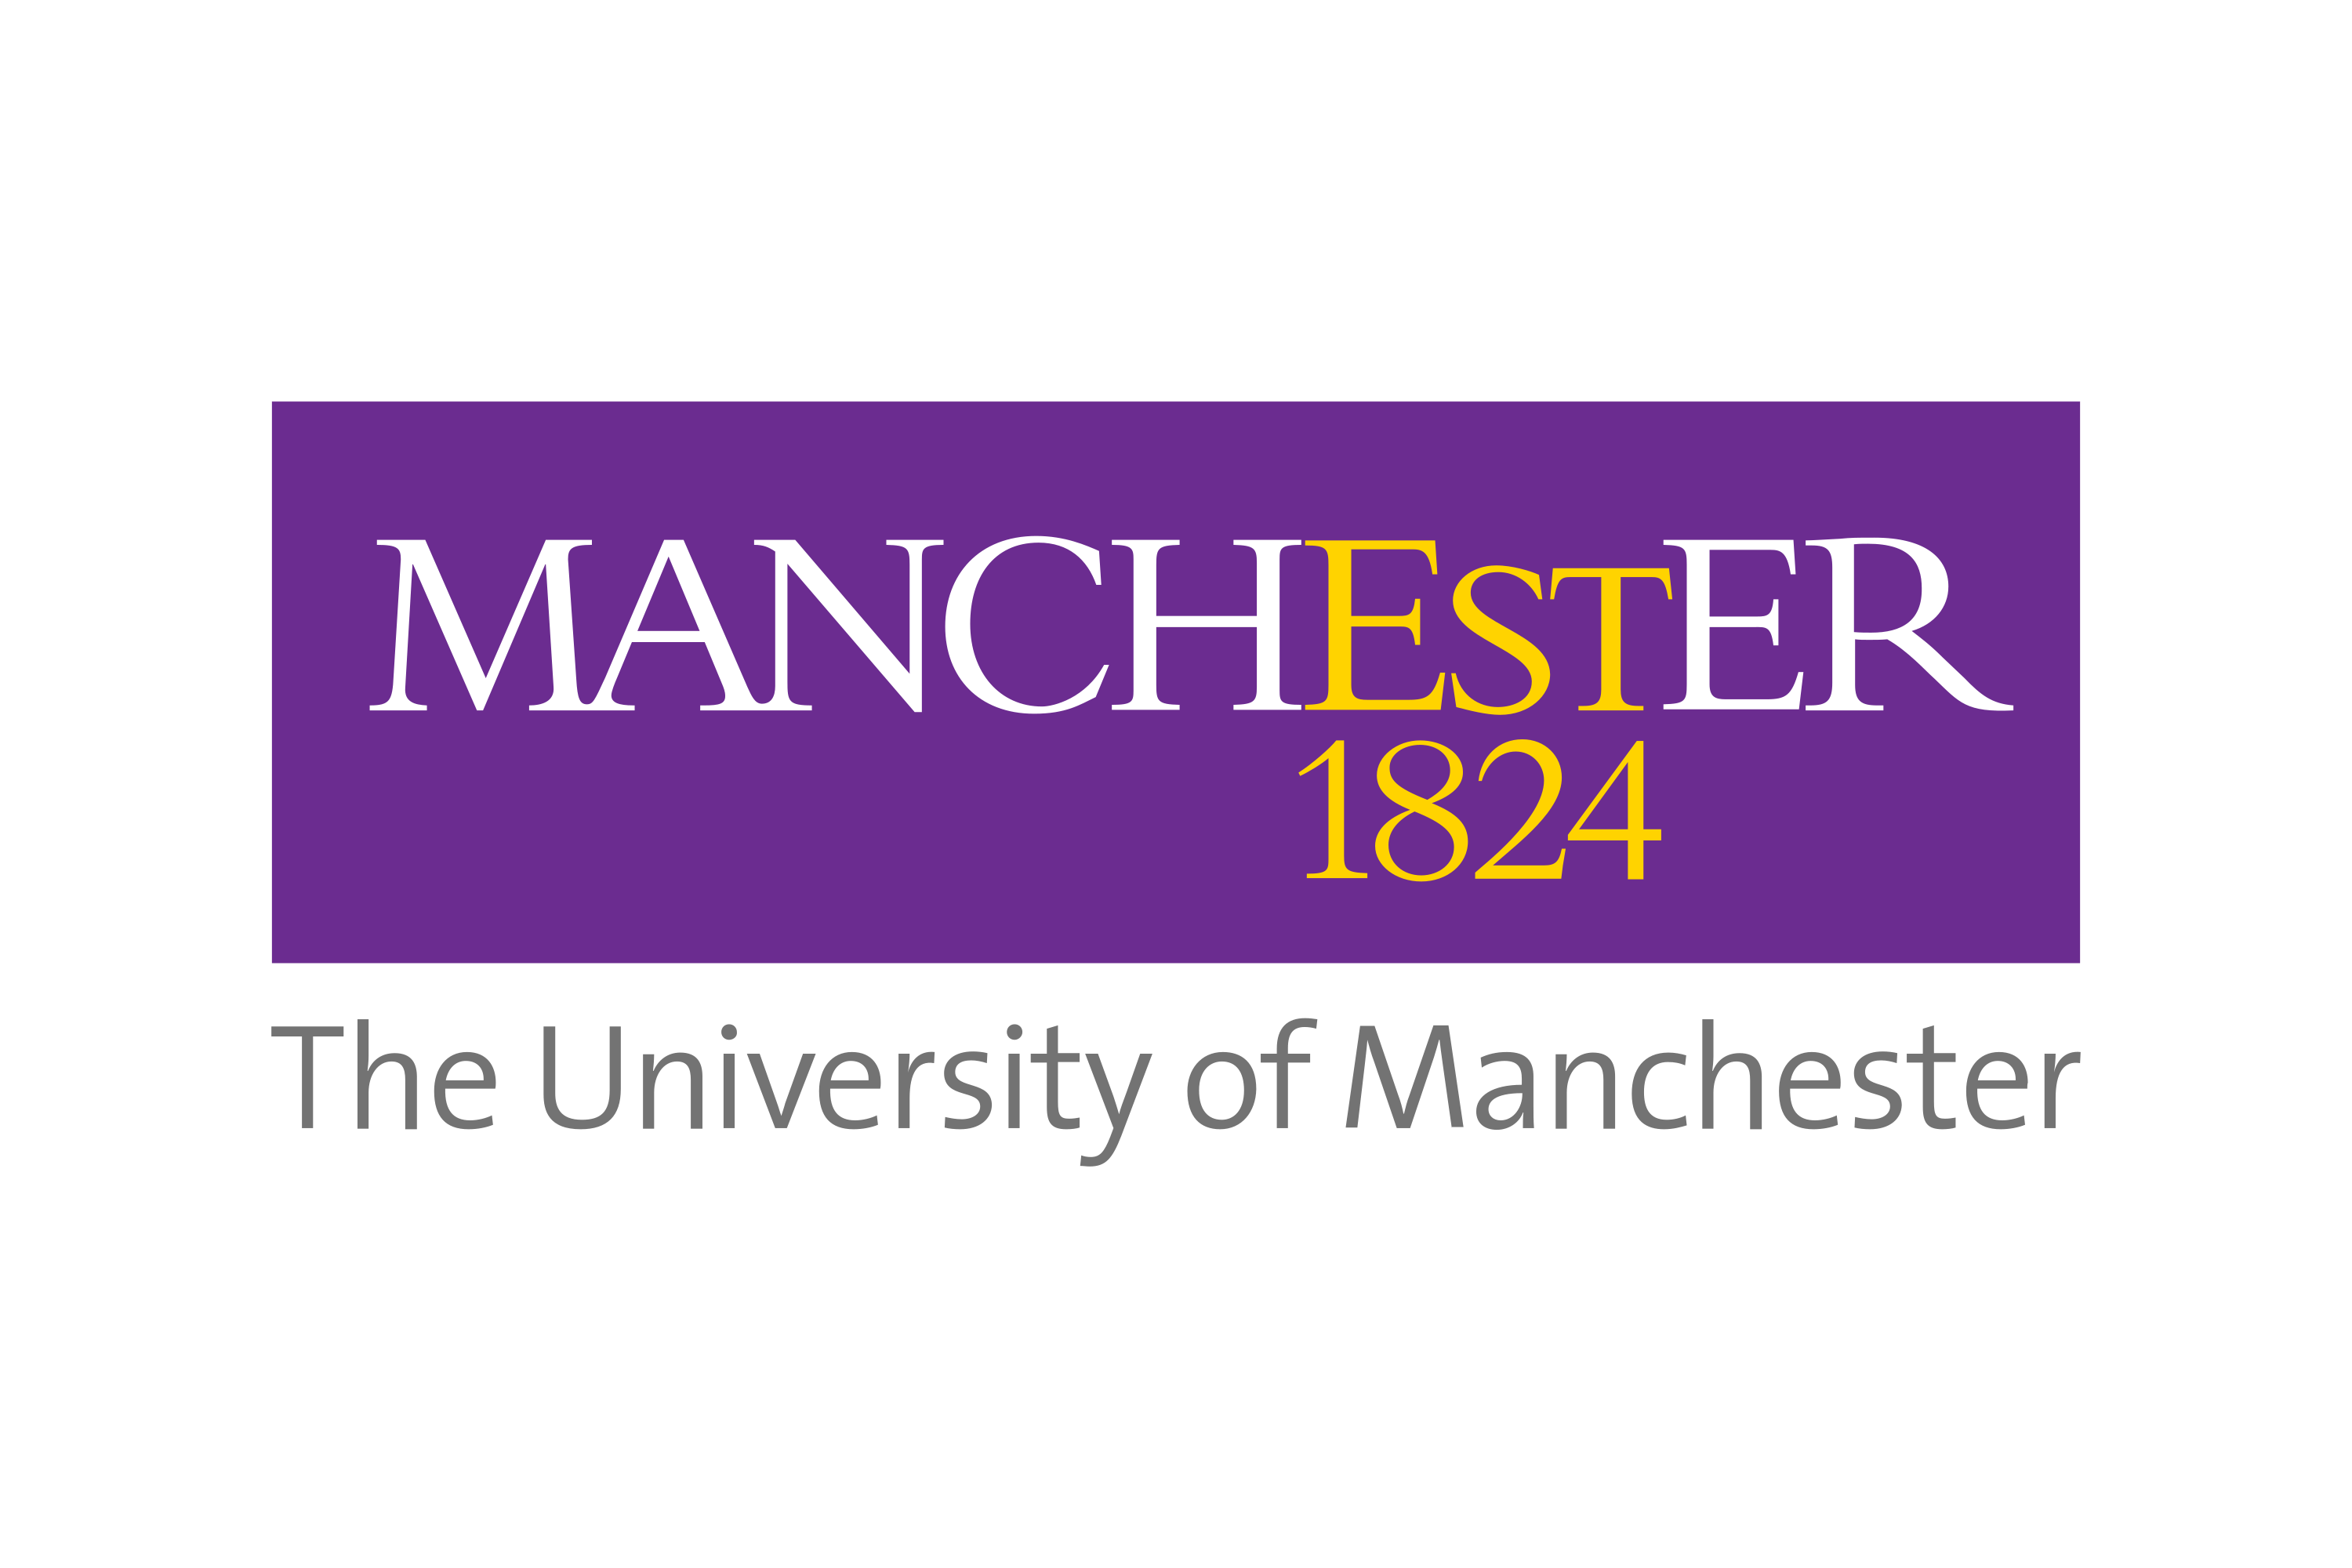 Download University of Manchester Logo in SVG Vector or PNG File Format ...